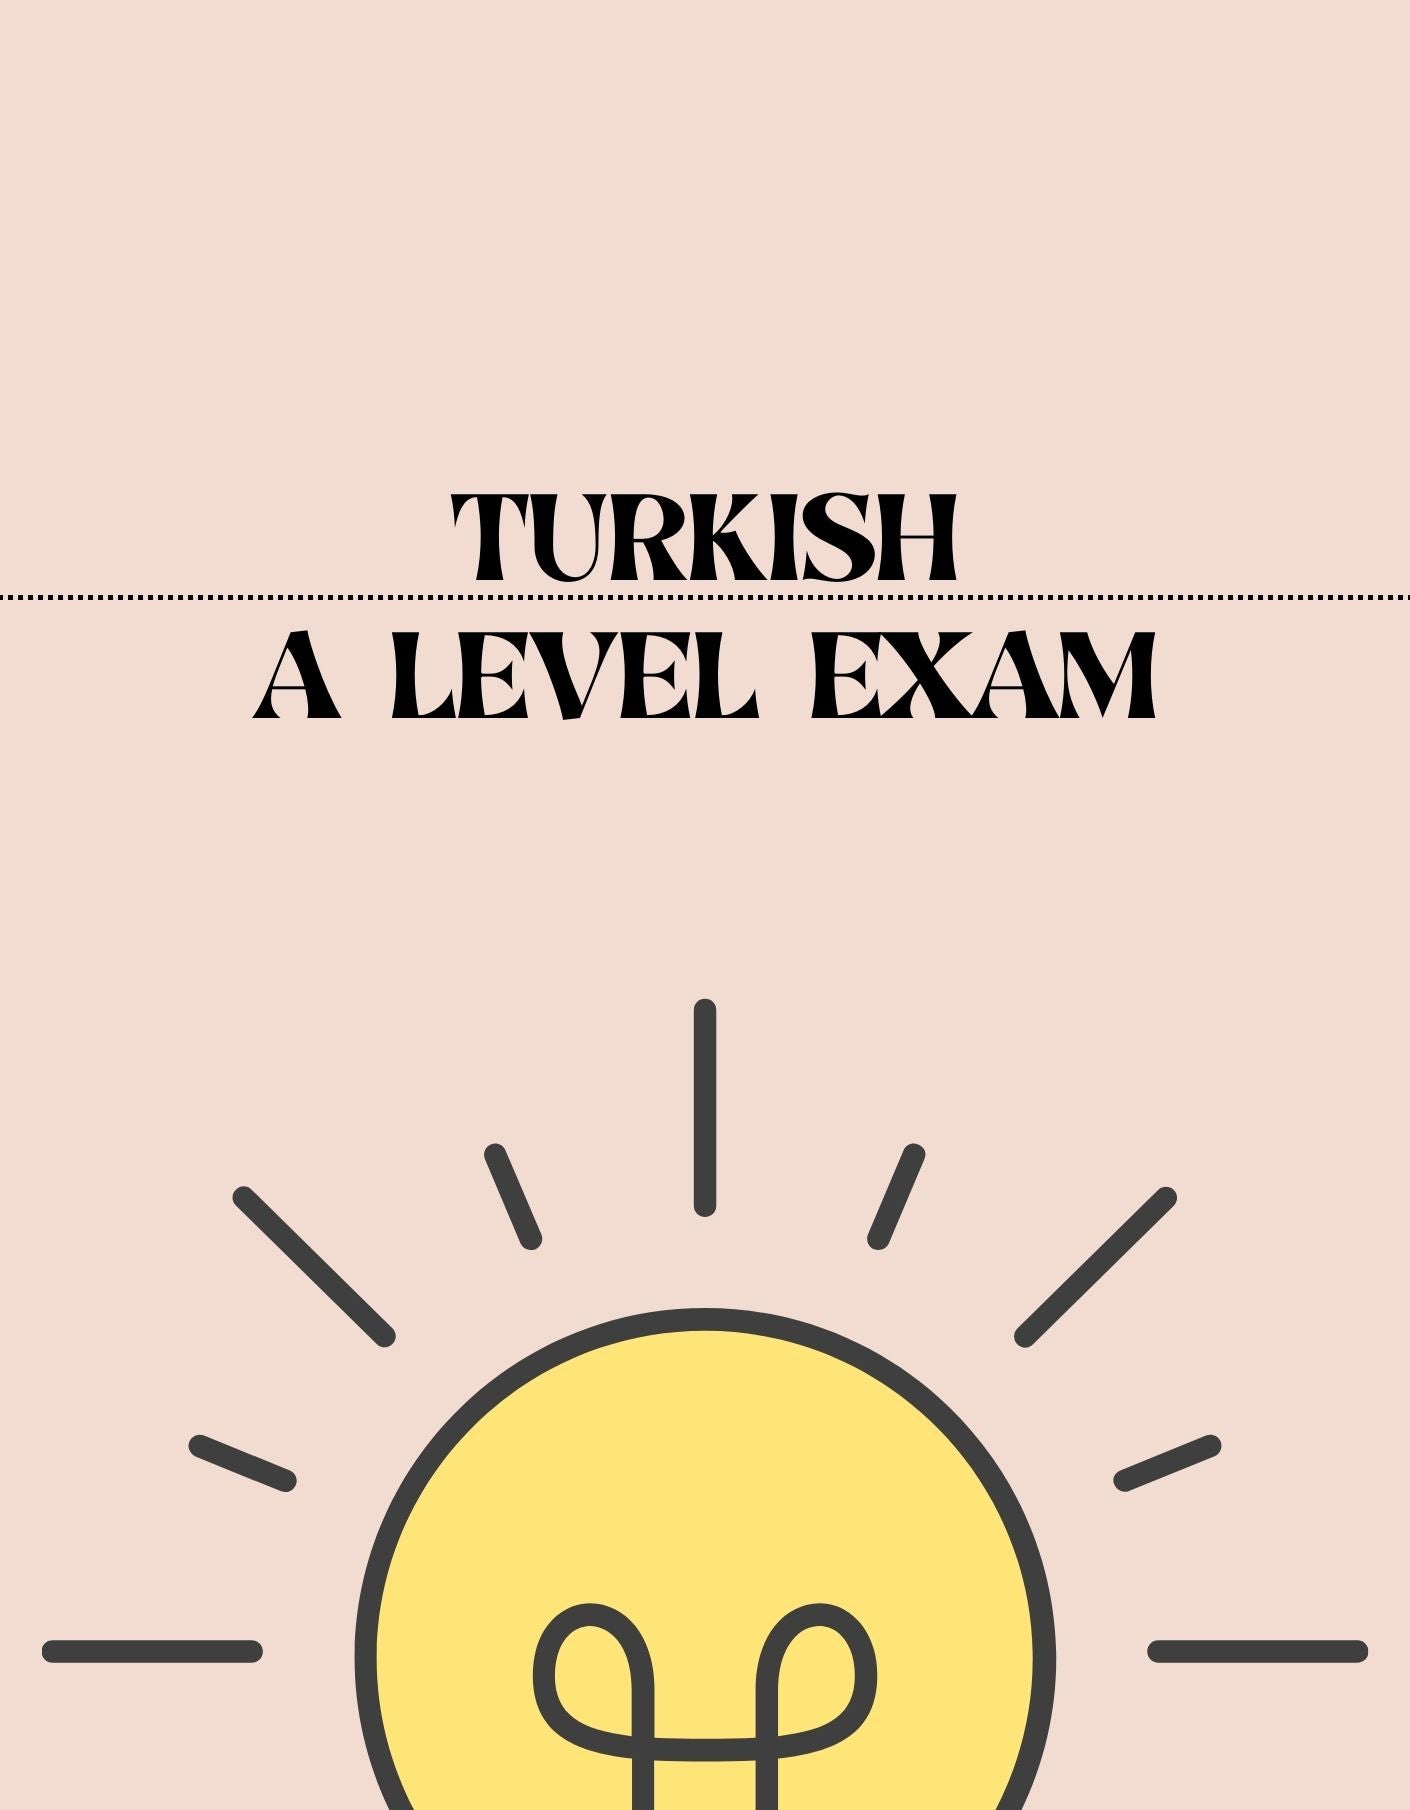 A Level - Turkish Exam - Exam Centre Birmingham Limited